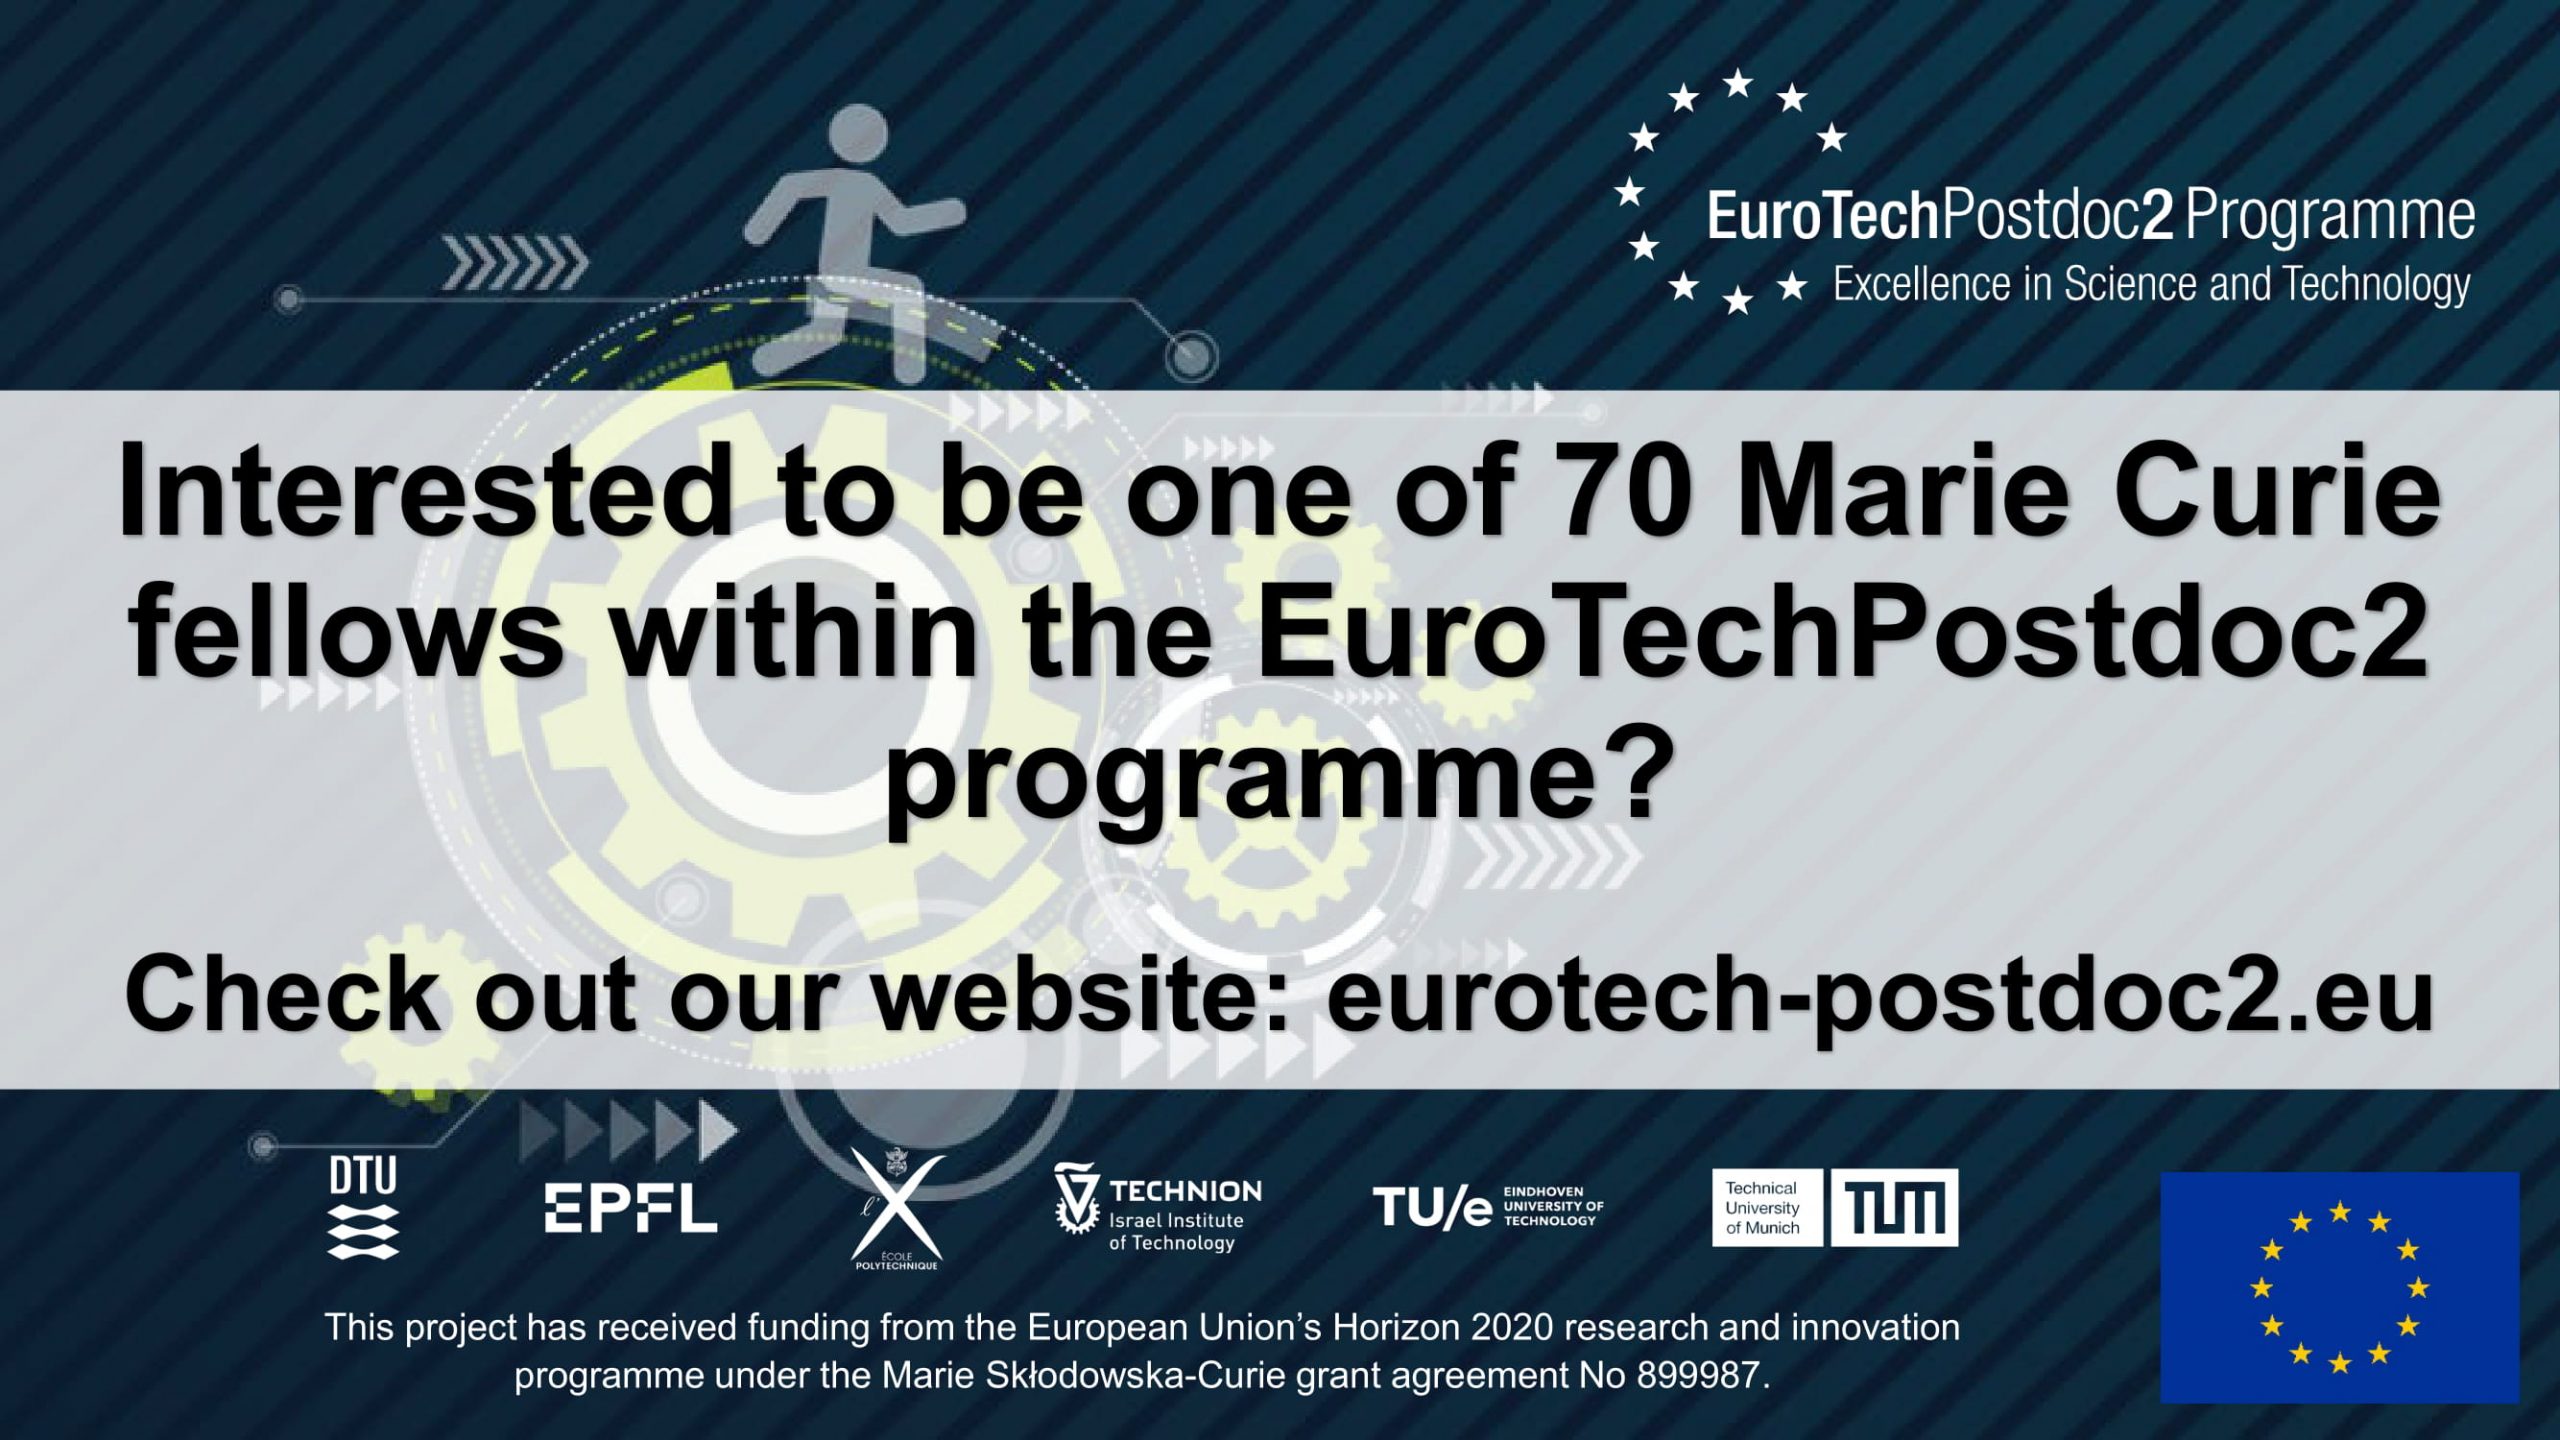 EuroTechPostdoc2 programme